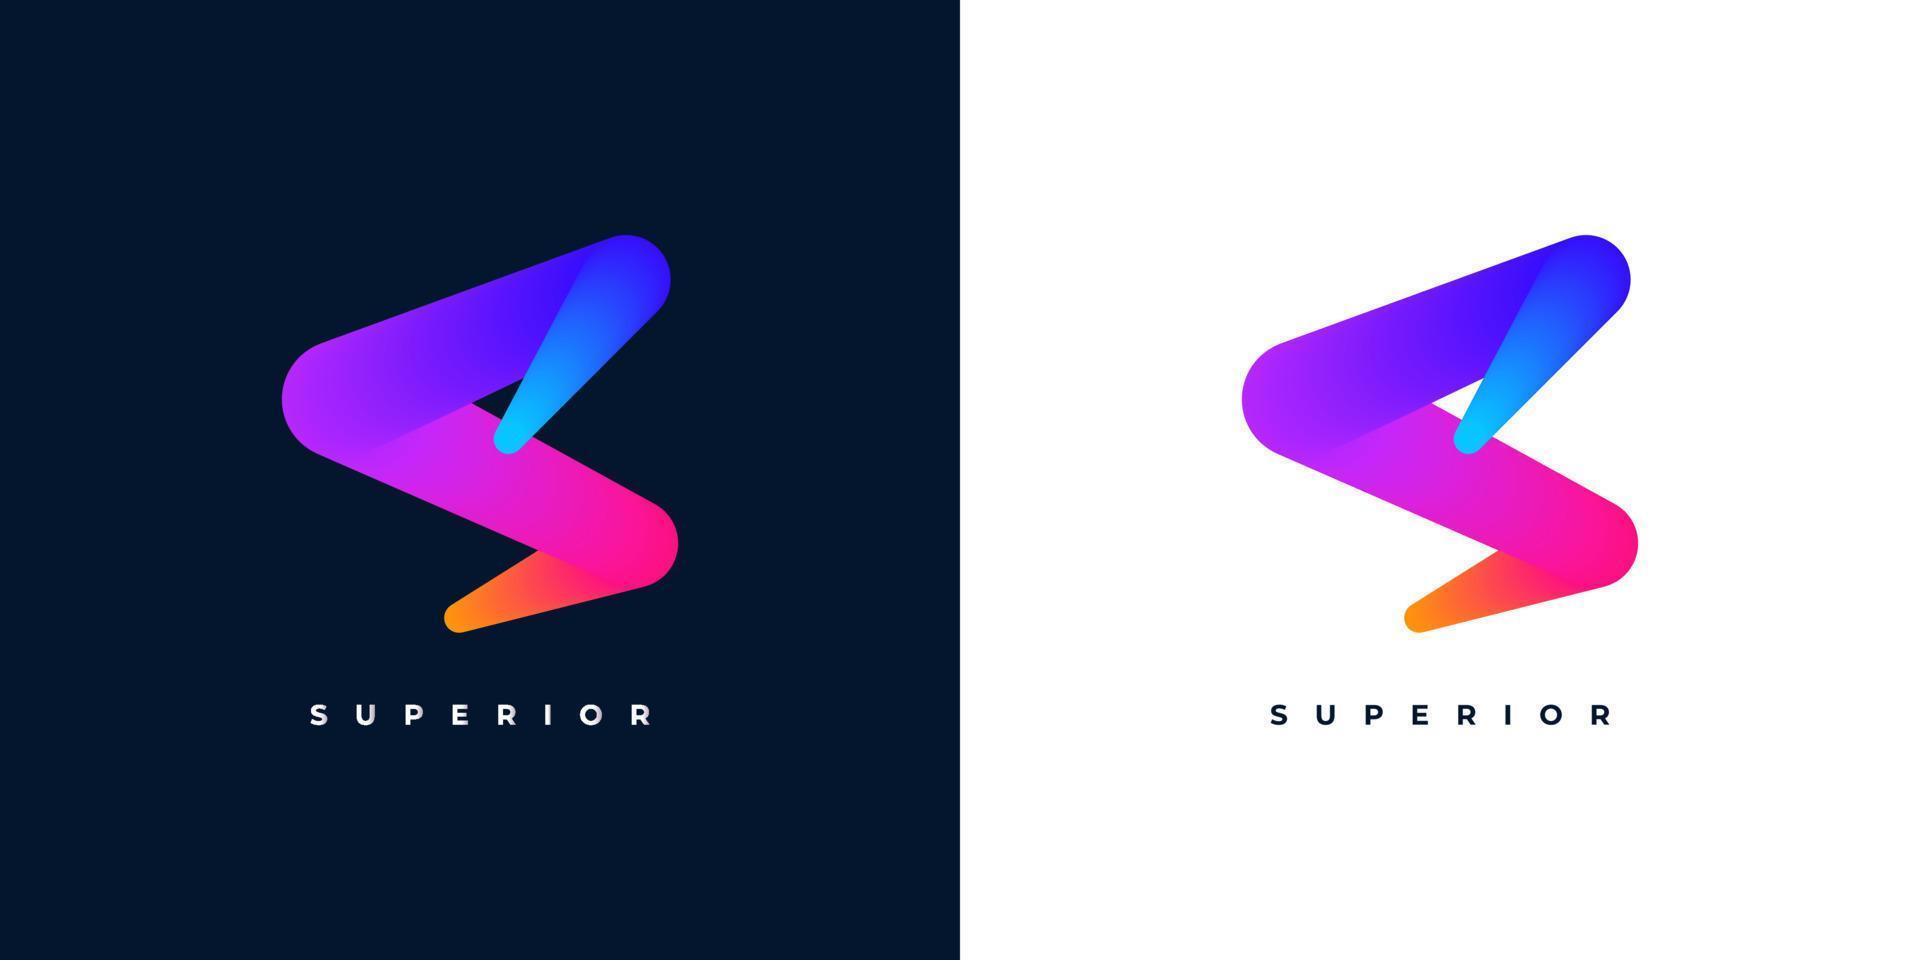 creativo y vibrante letra s logo diseño con vistoso degradado concepto. s logo con mezcla estilo vector